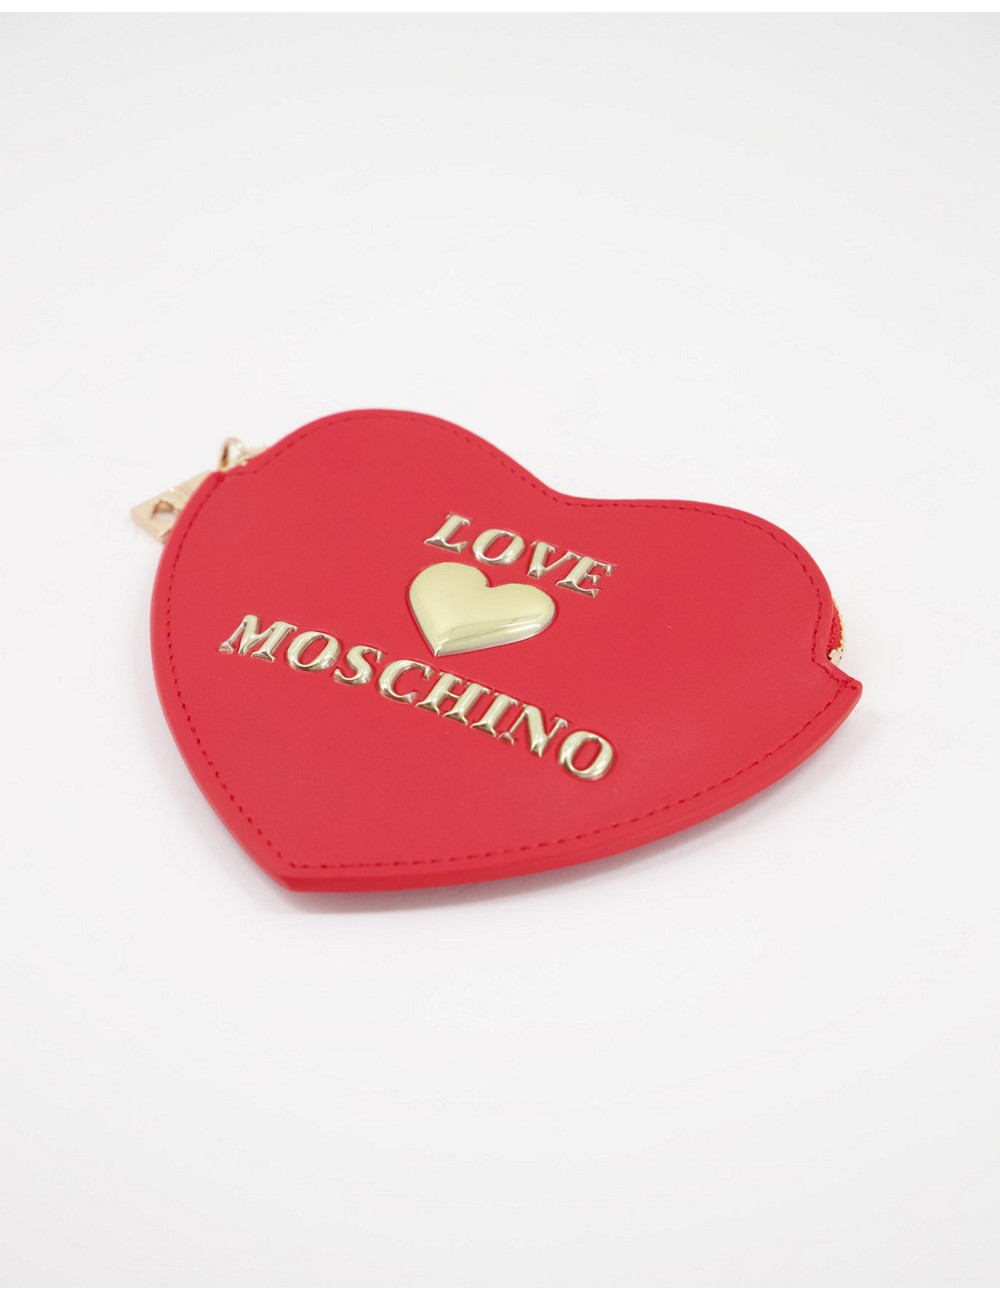 Love Moschino heart shaped...